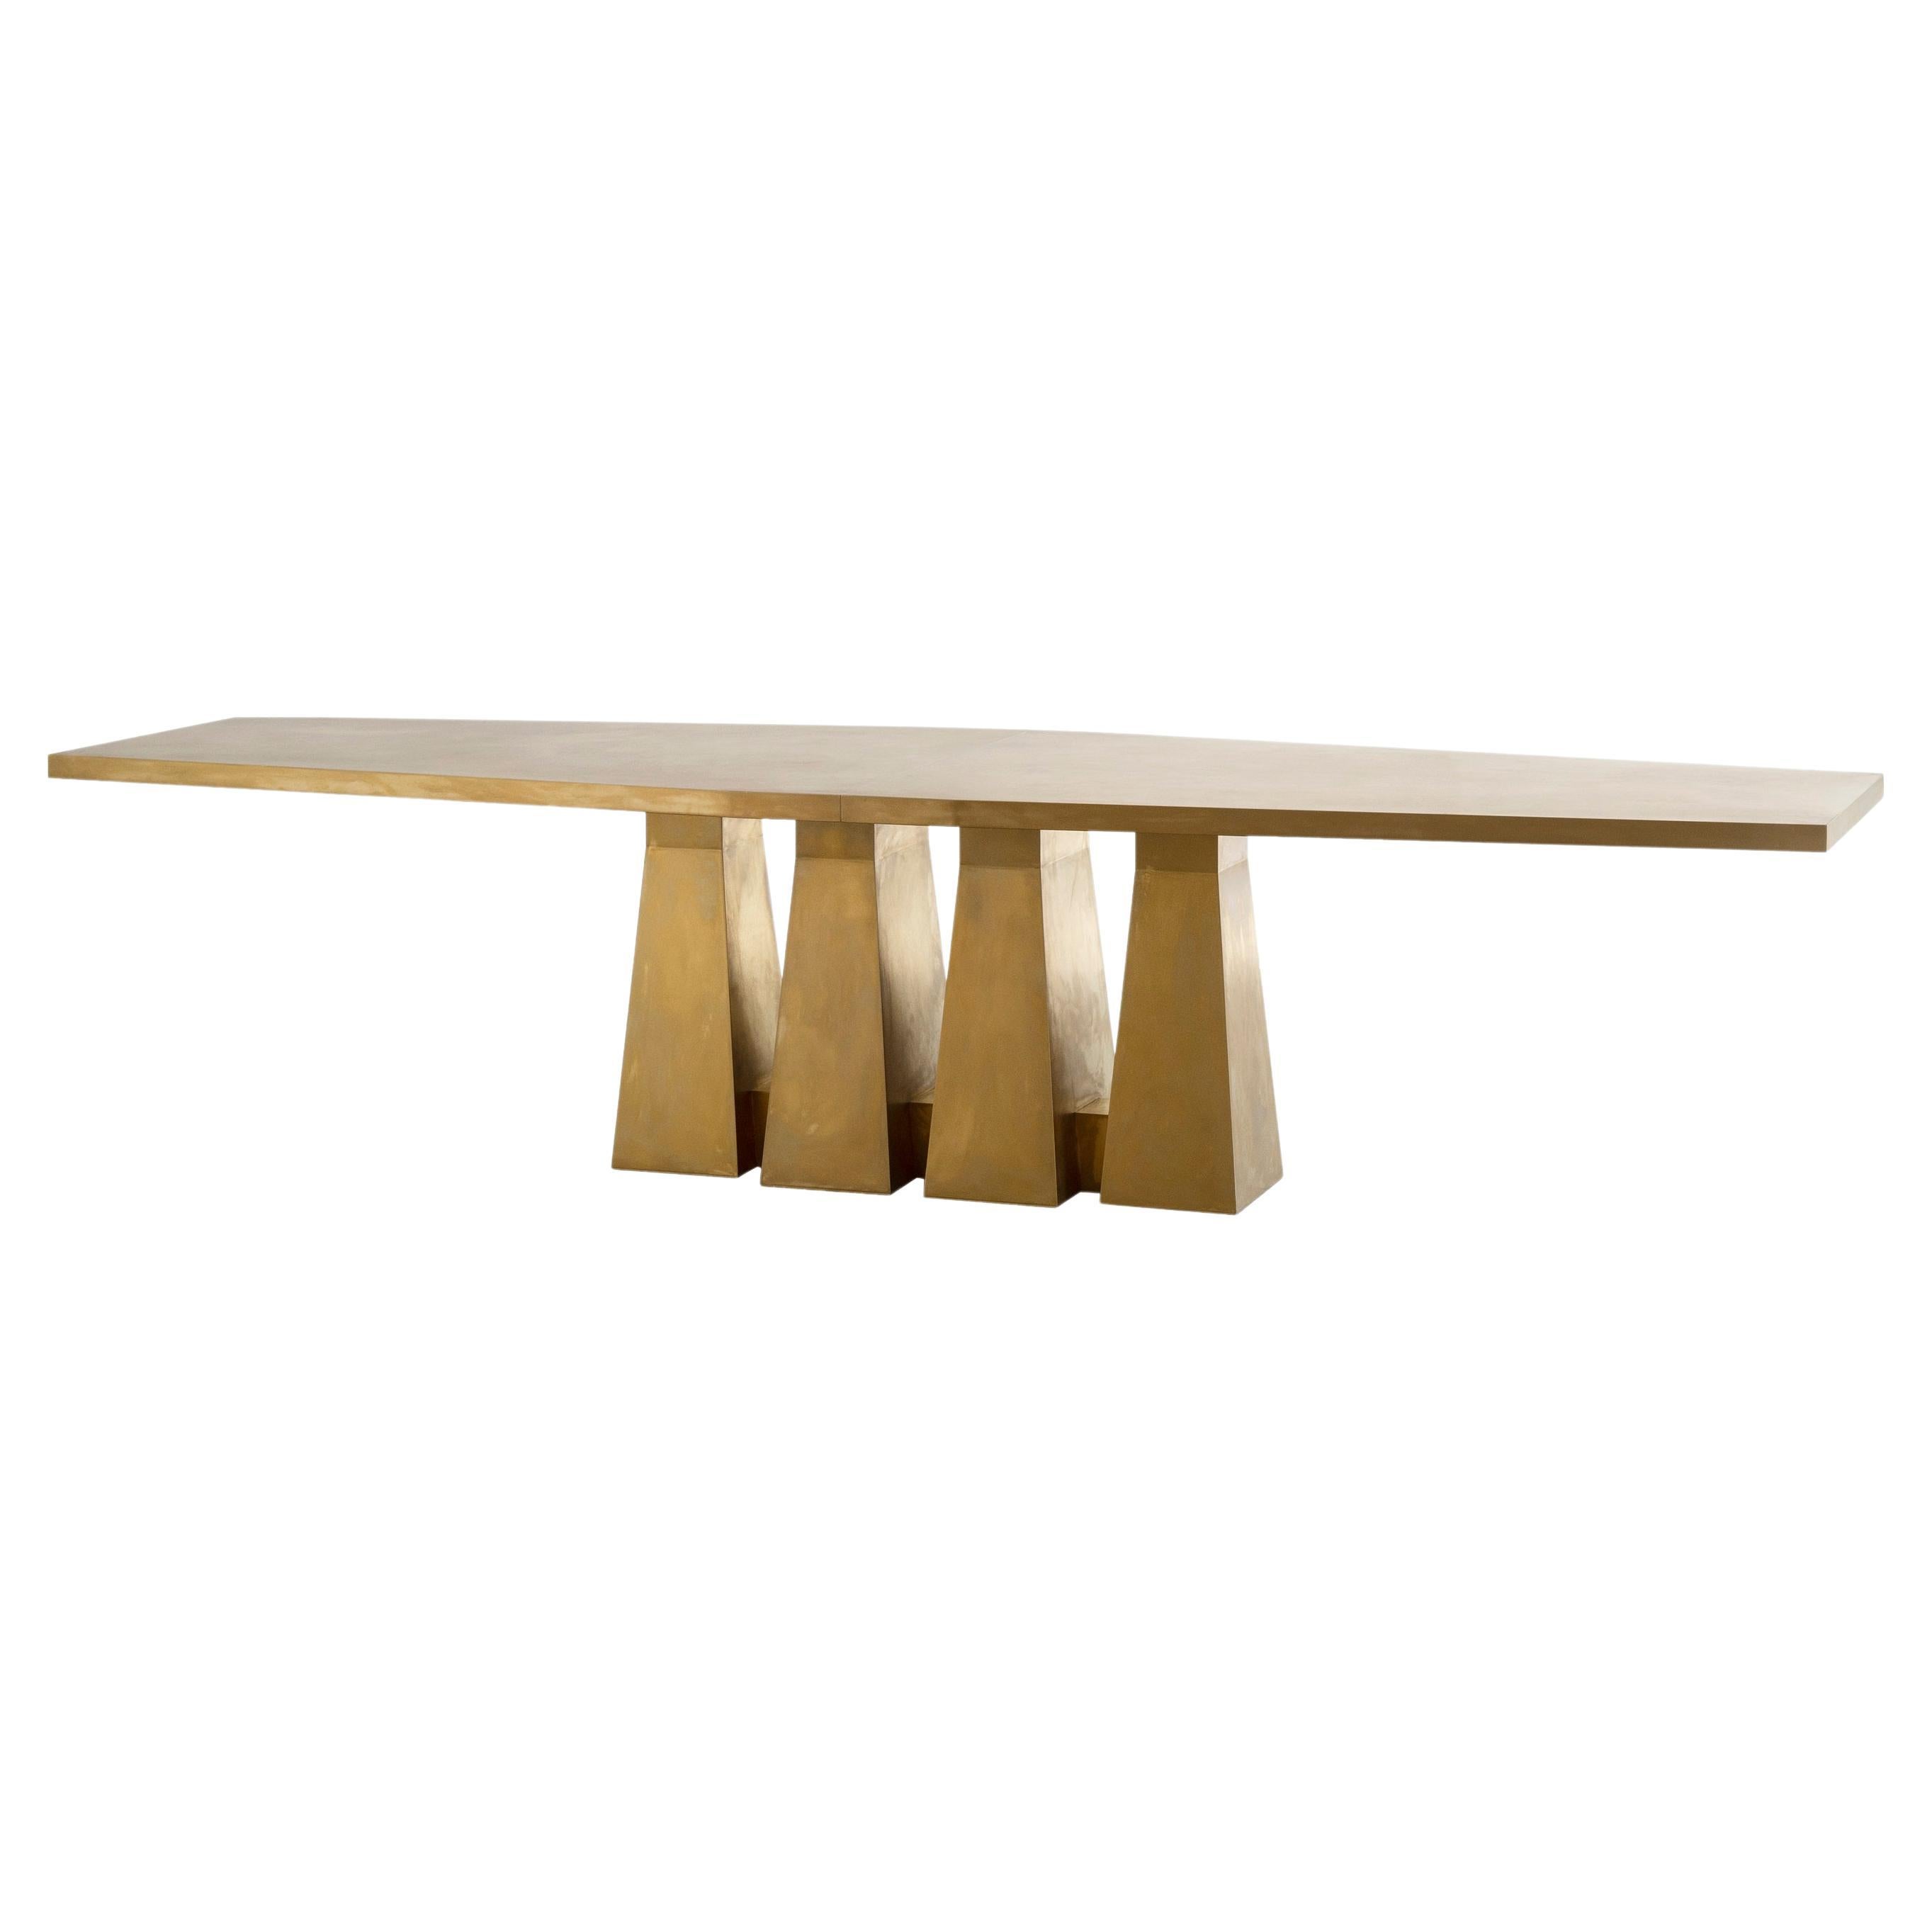 The Gate #01, Long Table/ Desk by Singchan Design Borderland Series For Sale